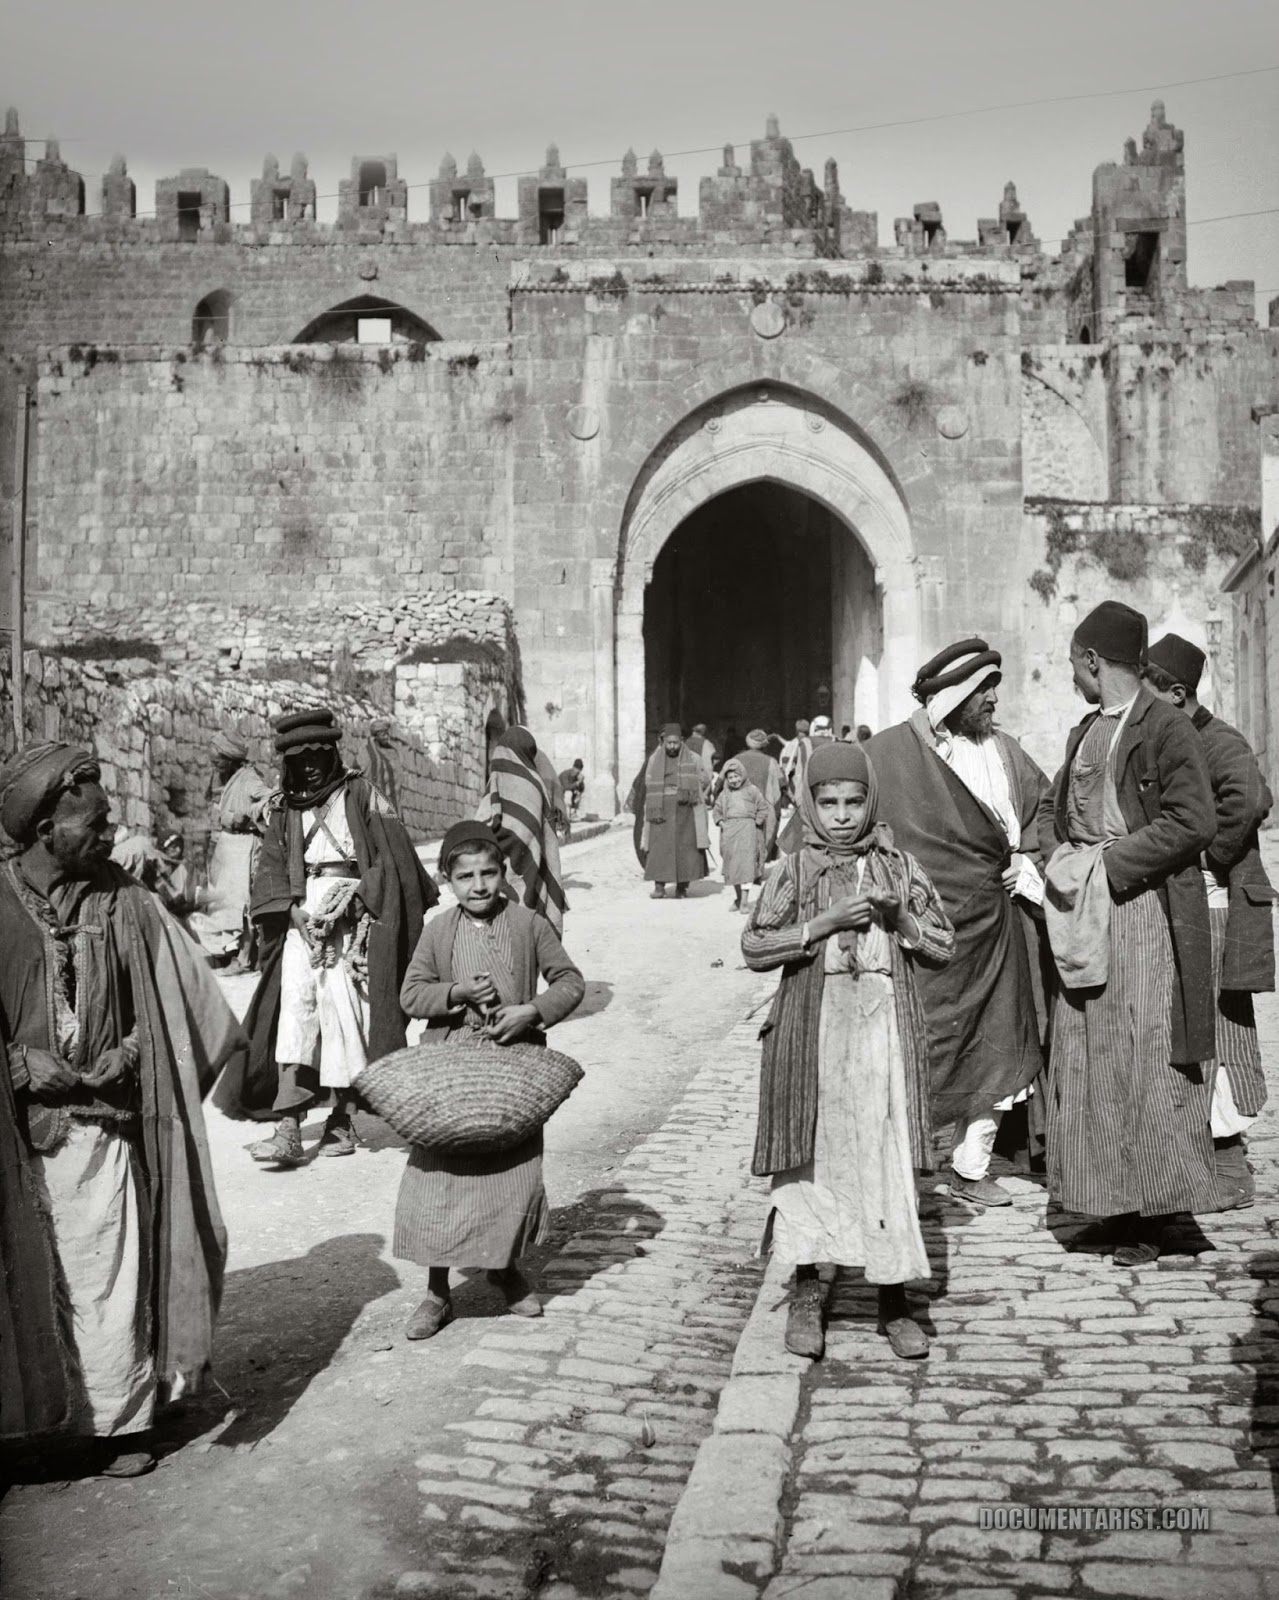 Jerusalén a finales del siglo XIX y principios del siglo XX Fotograf%C3%ADas%2Bde%2Bla%2Bantigua%2BJerusal%C3%A9n%2B14